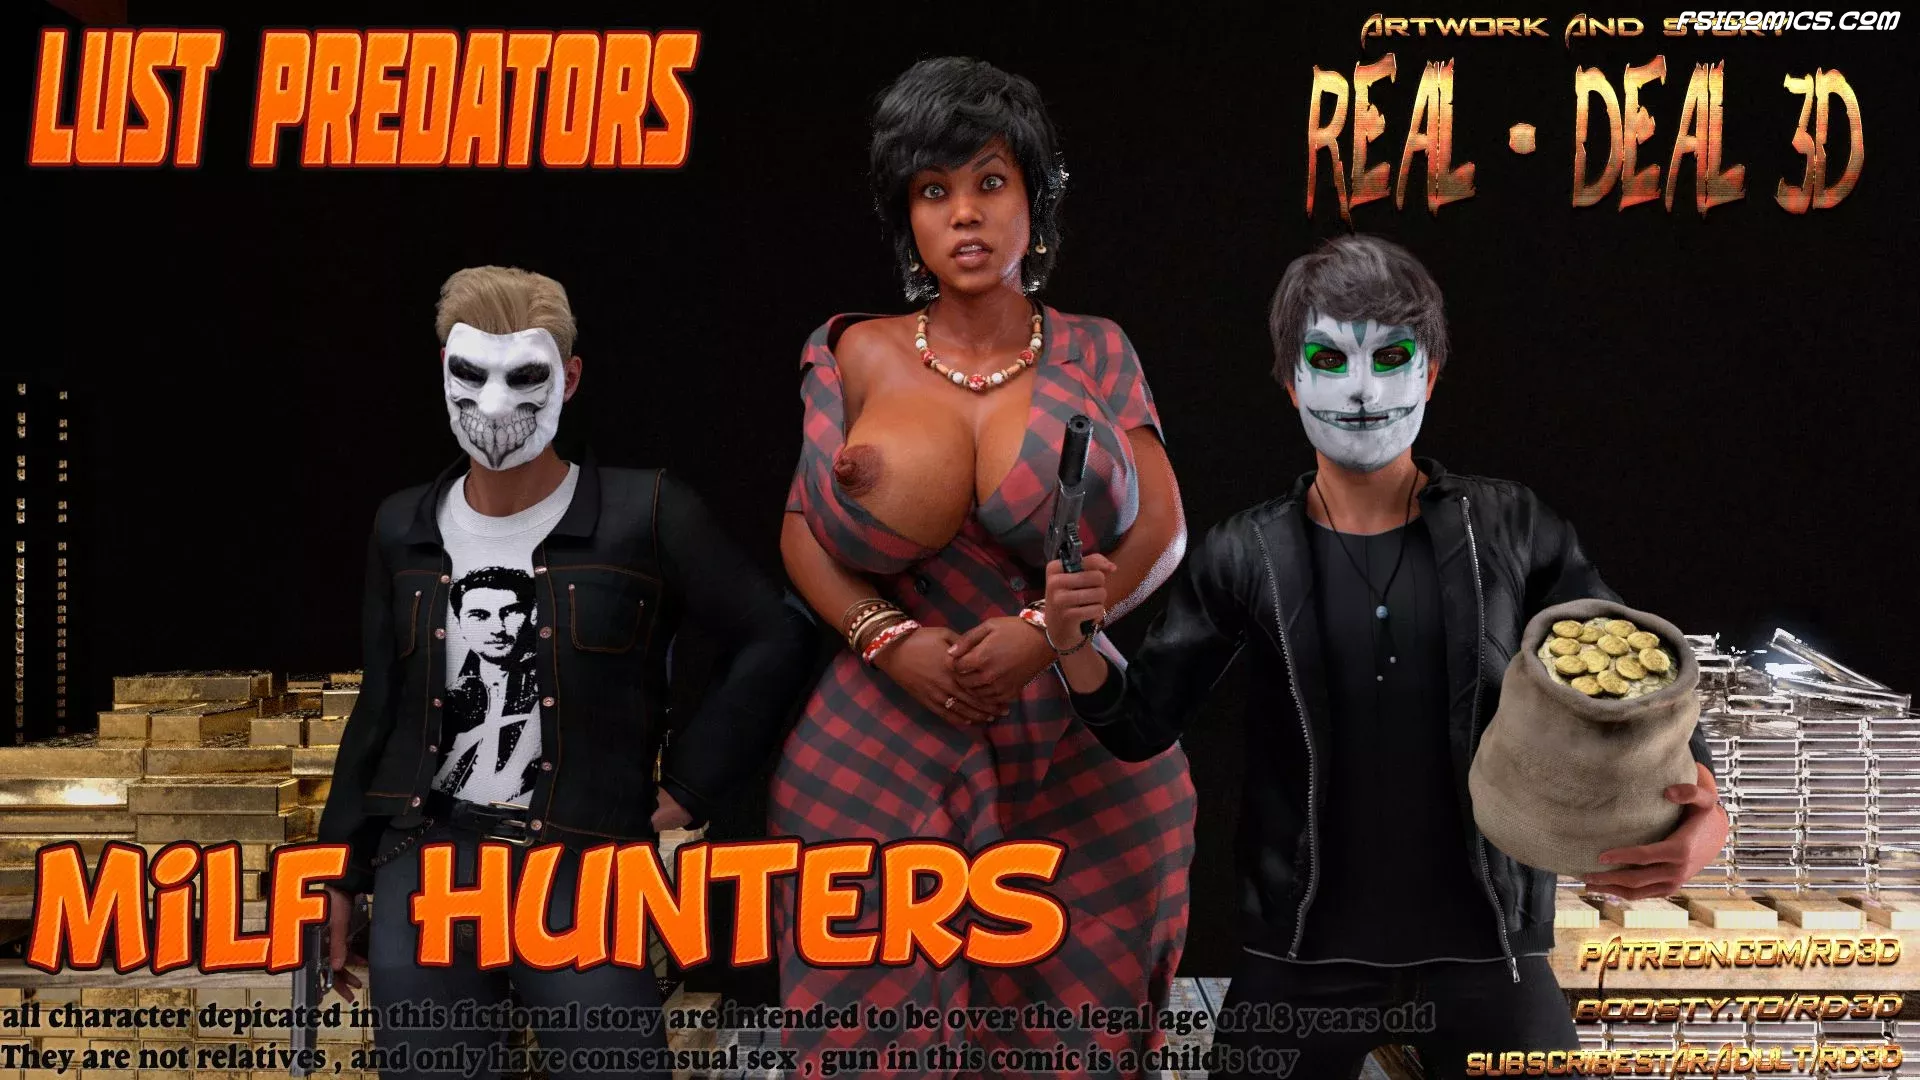 MILF Hunters Chapter 1 - Real Deal 3D - 39 - FSIComics